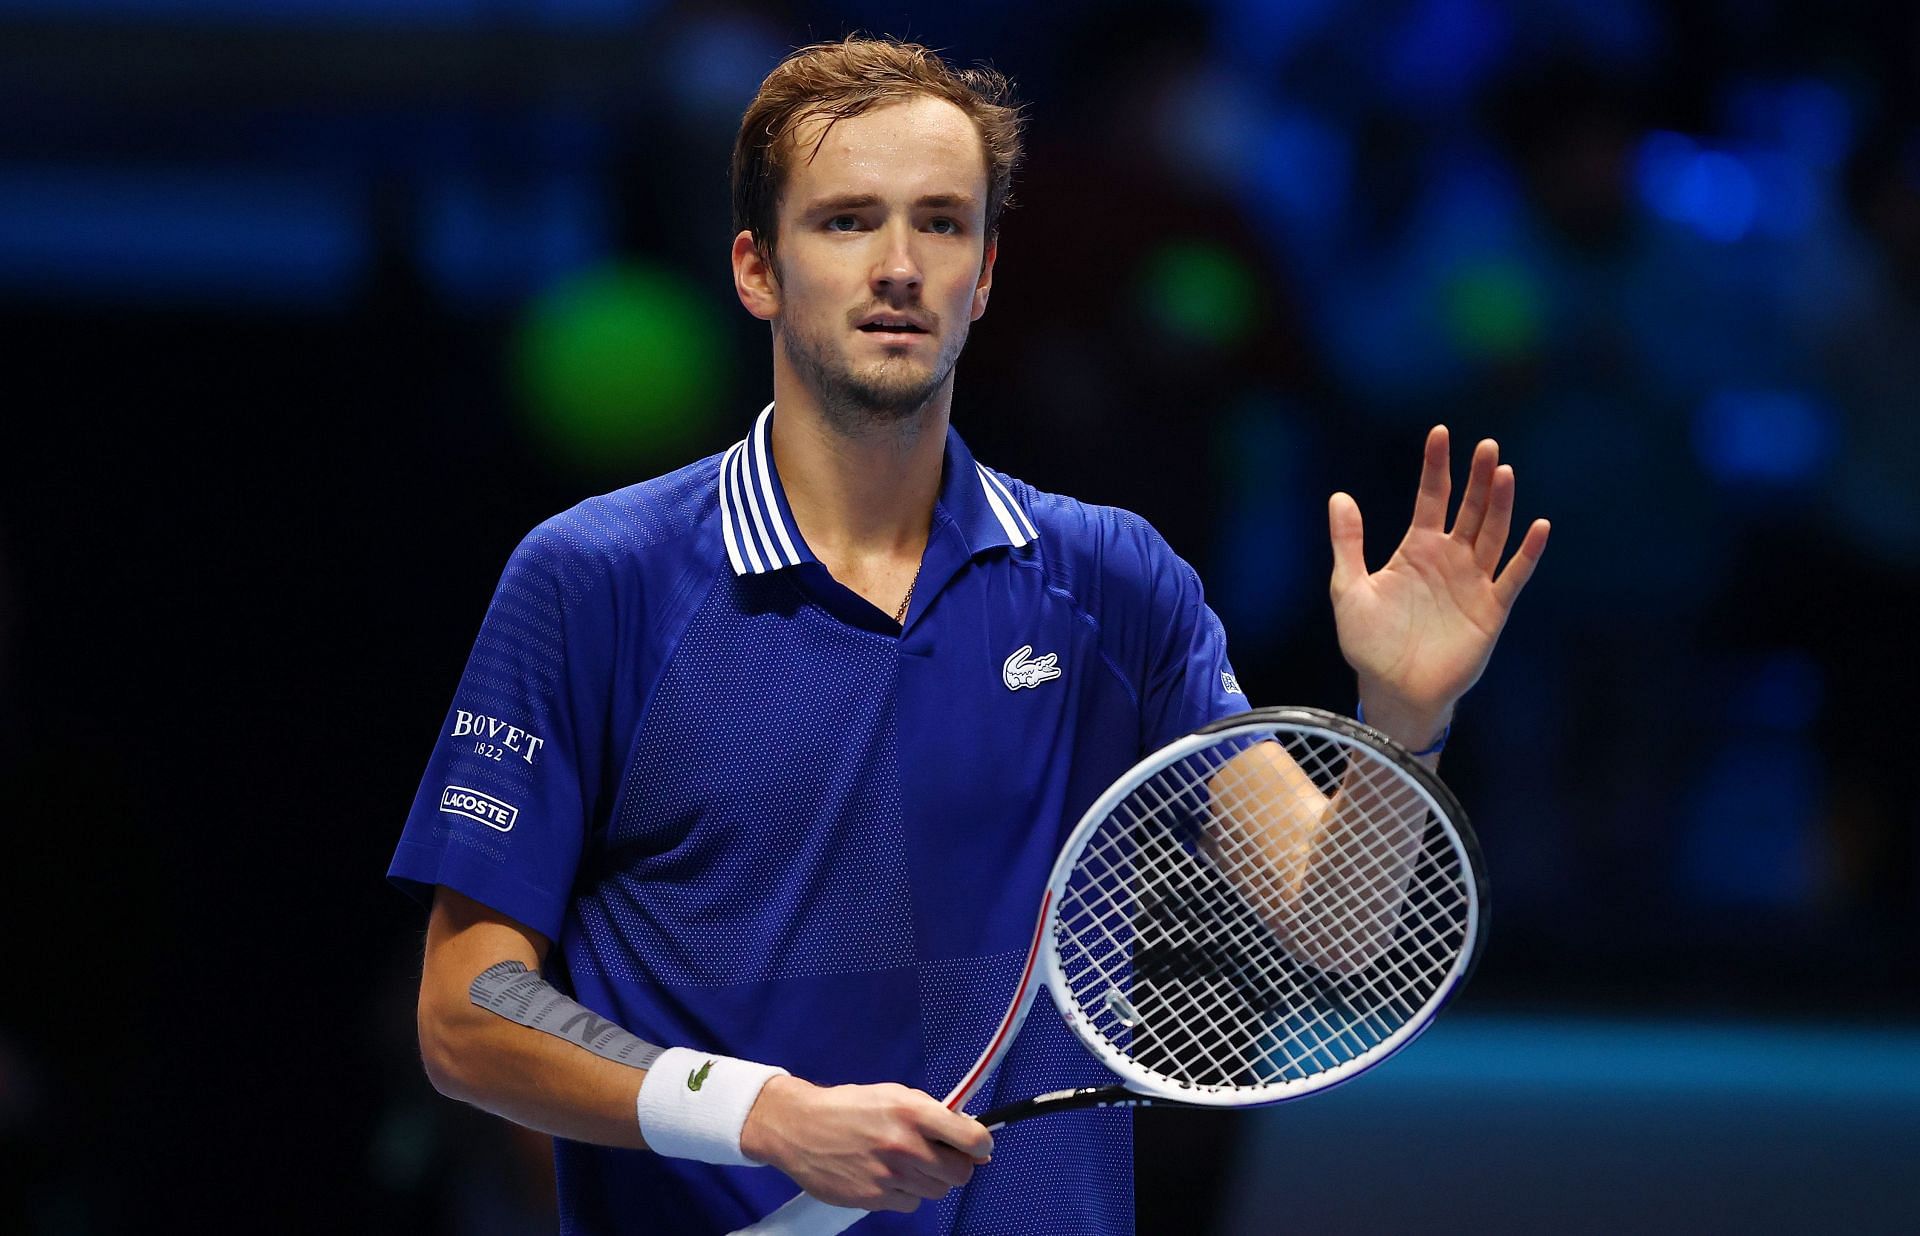 Daniil Medvedev celebrates his win over Casper Ruud at the Nitto ATP World Tour Finals